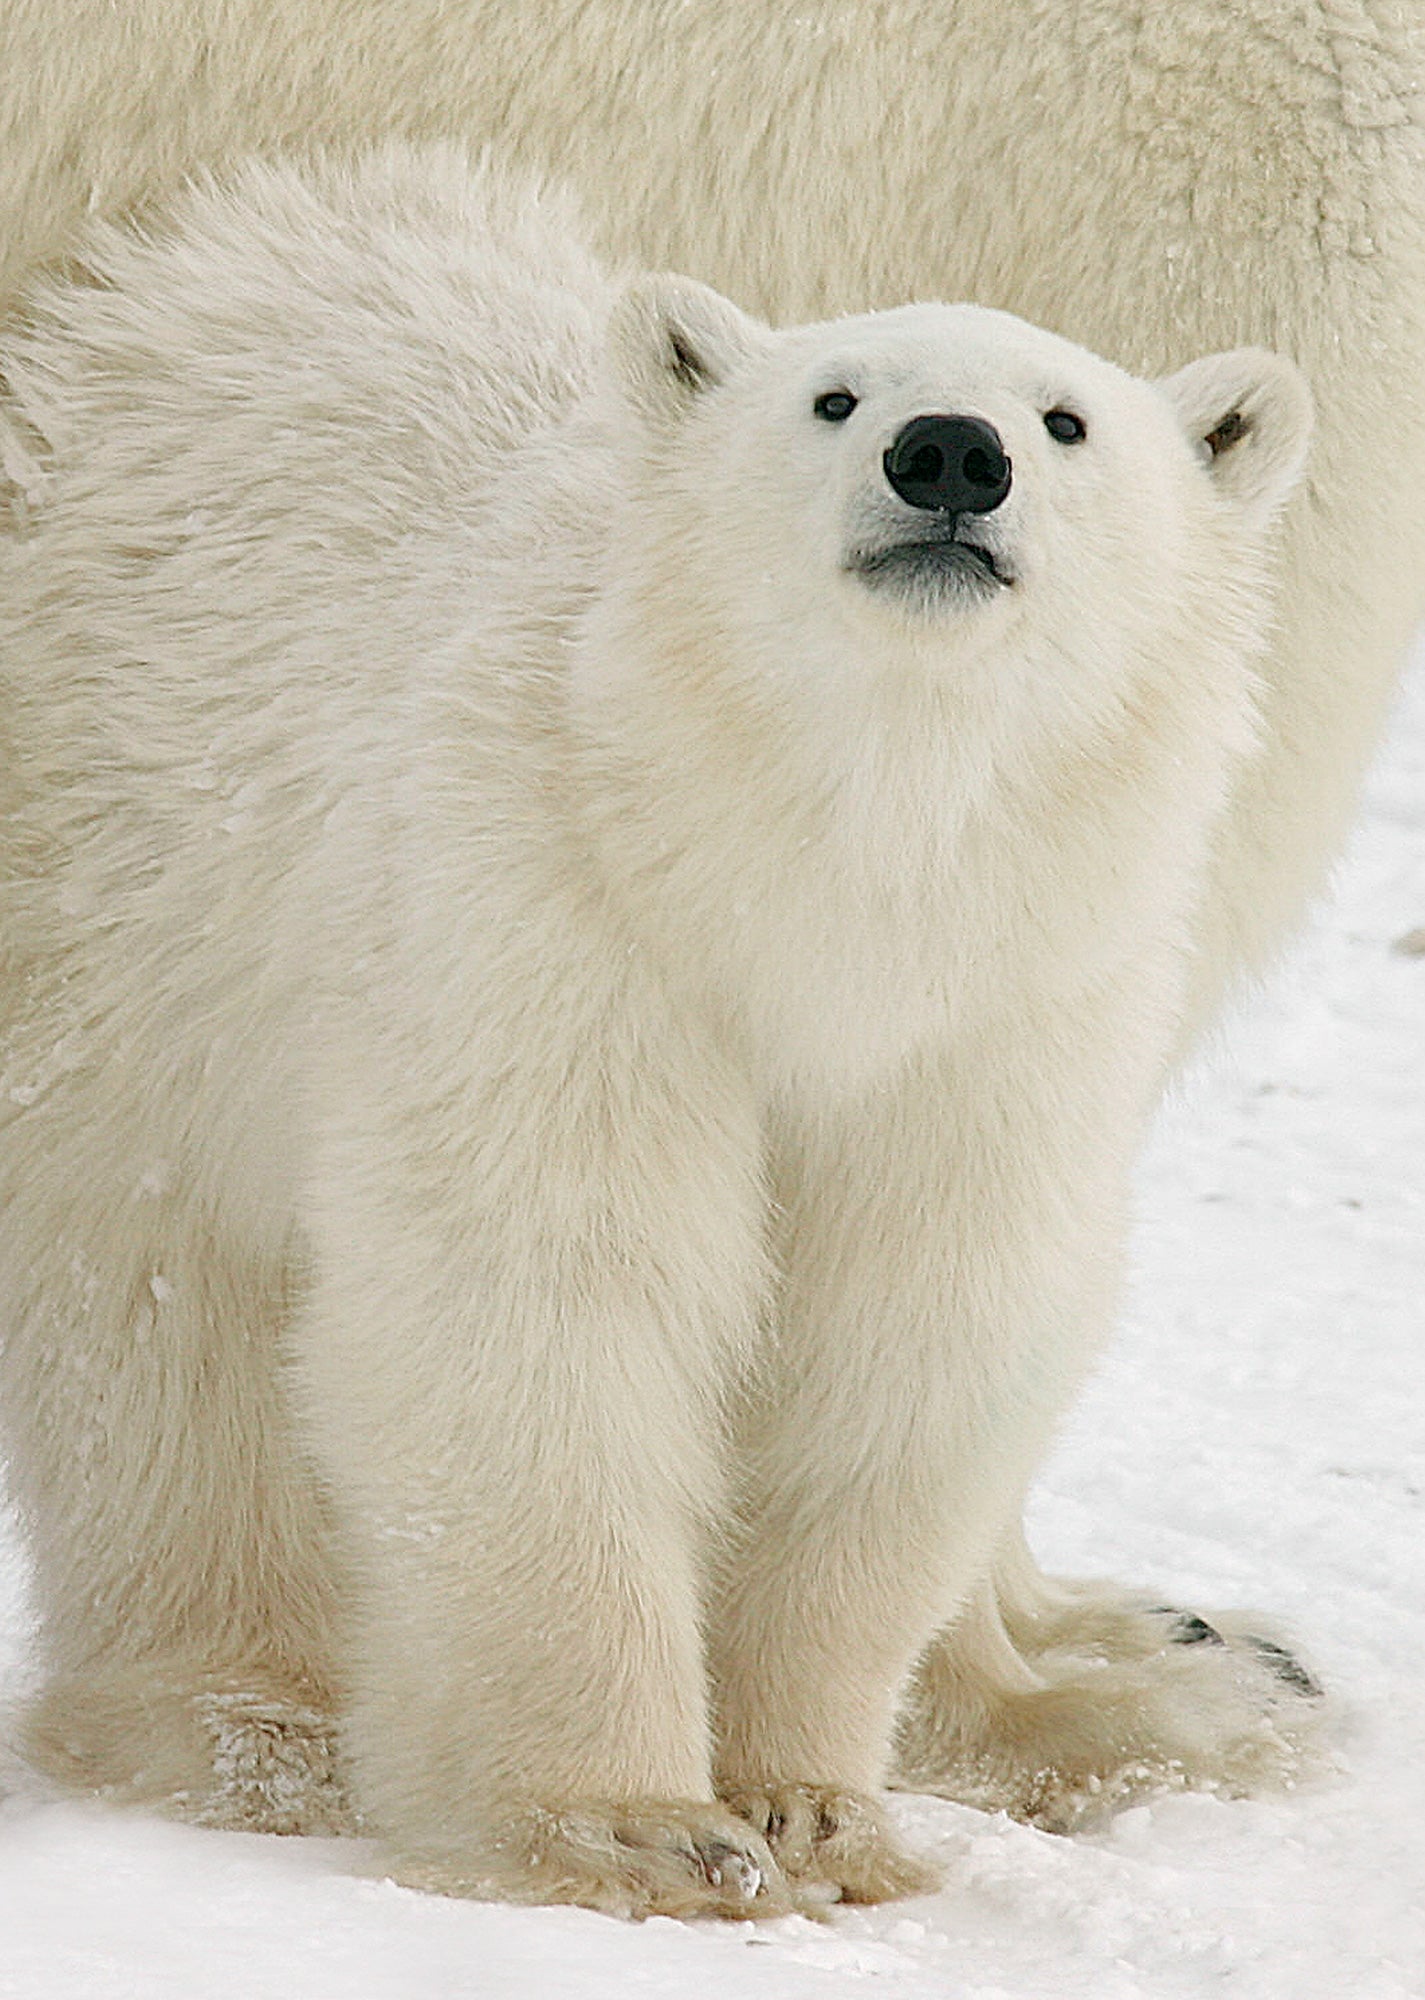 A baby polar bear standing next to its parent. End of image description. 